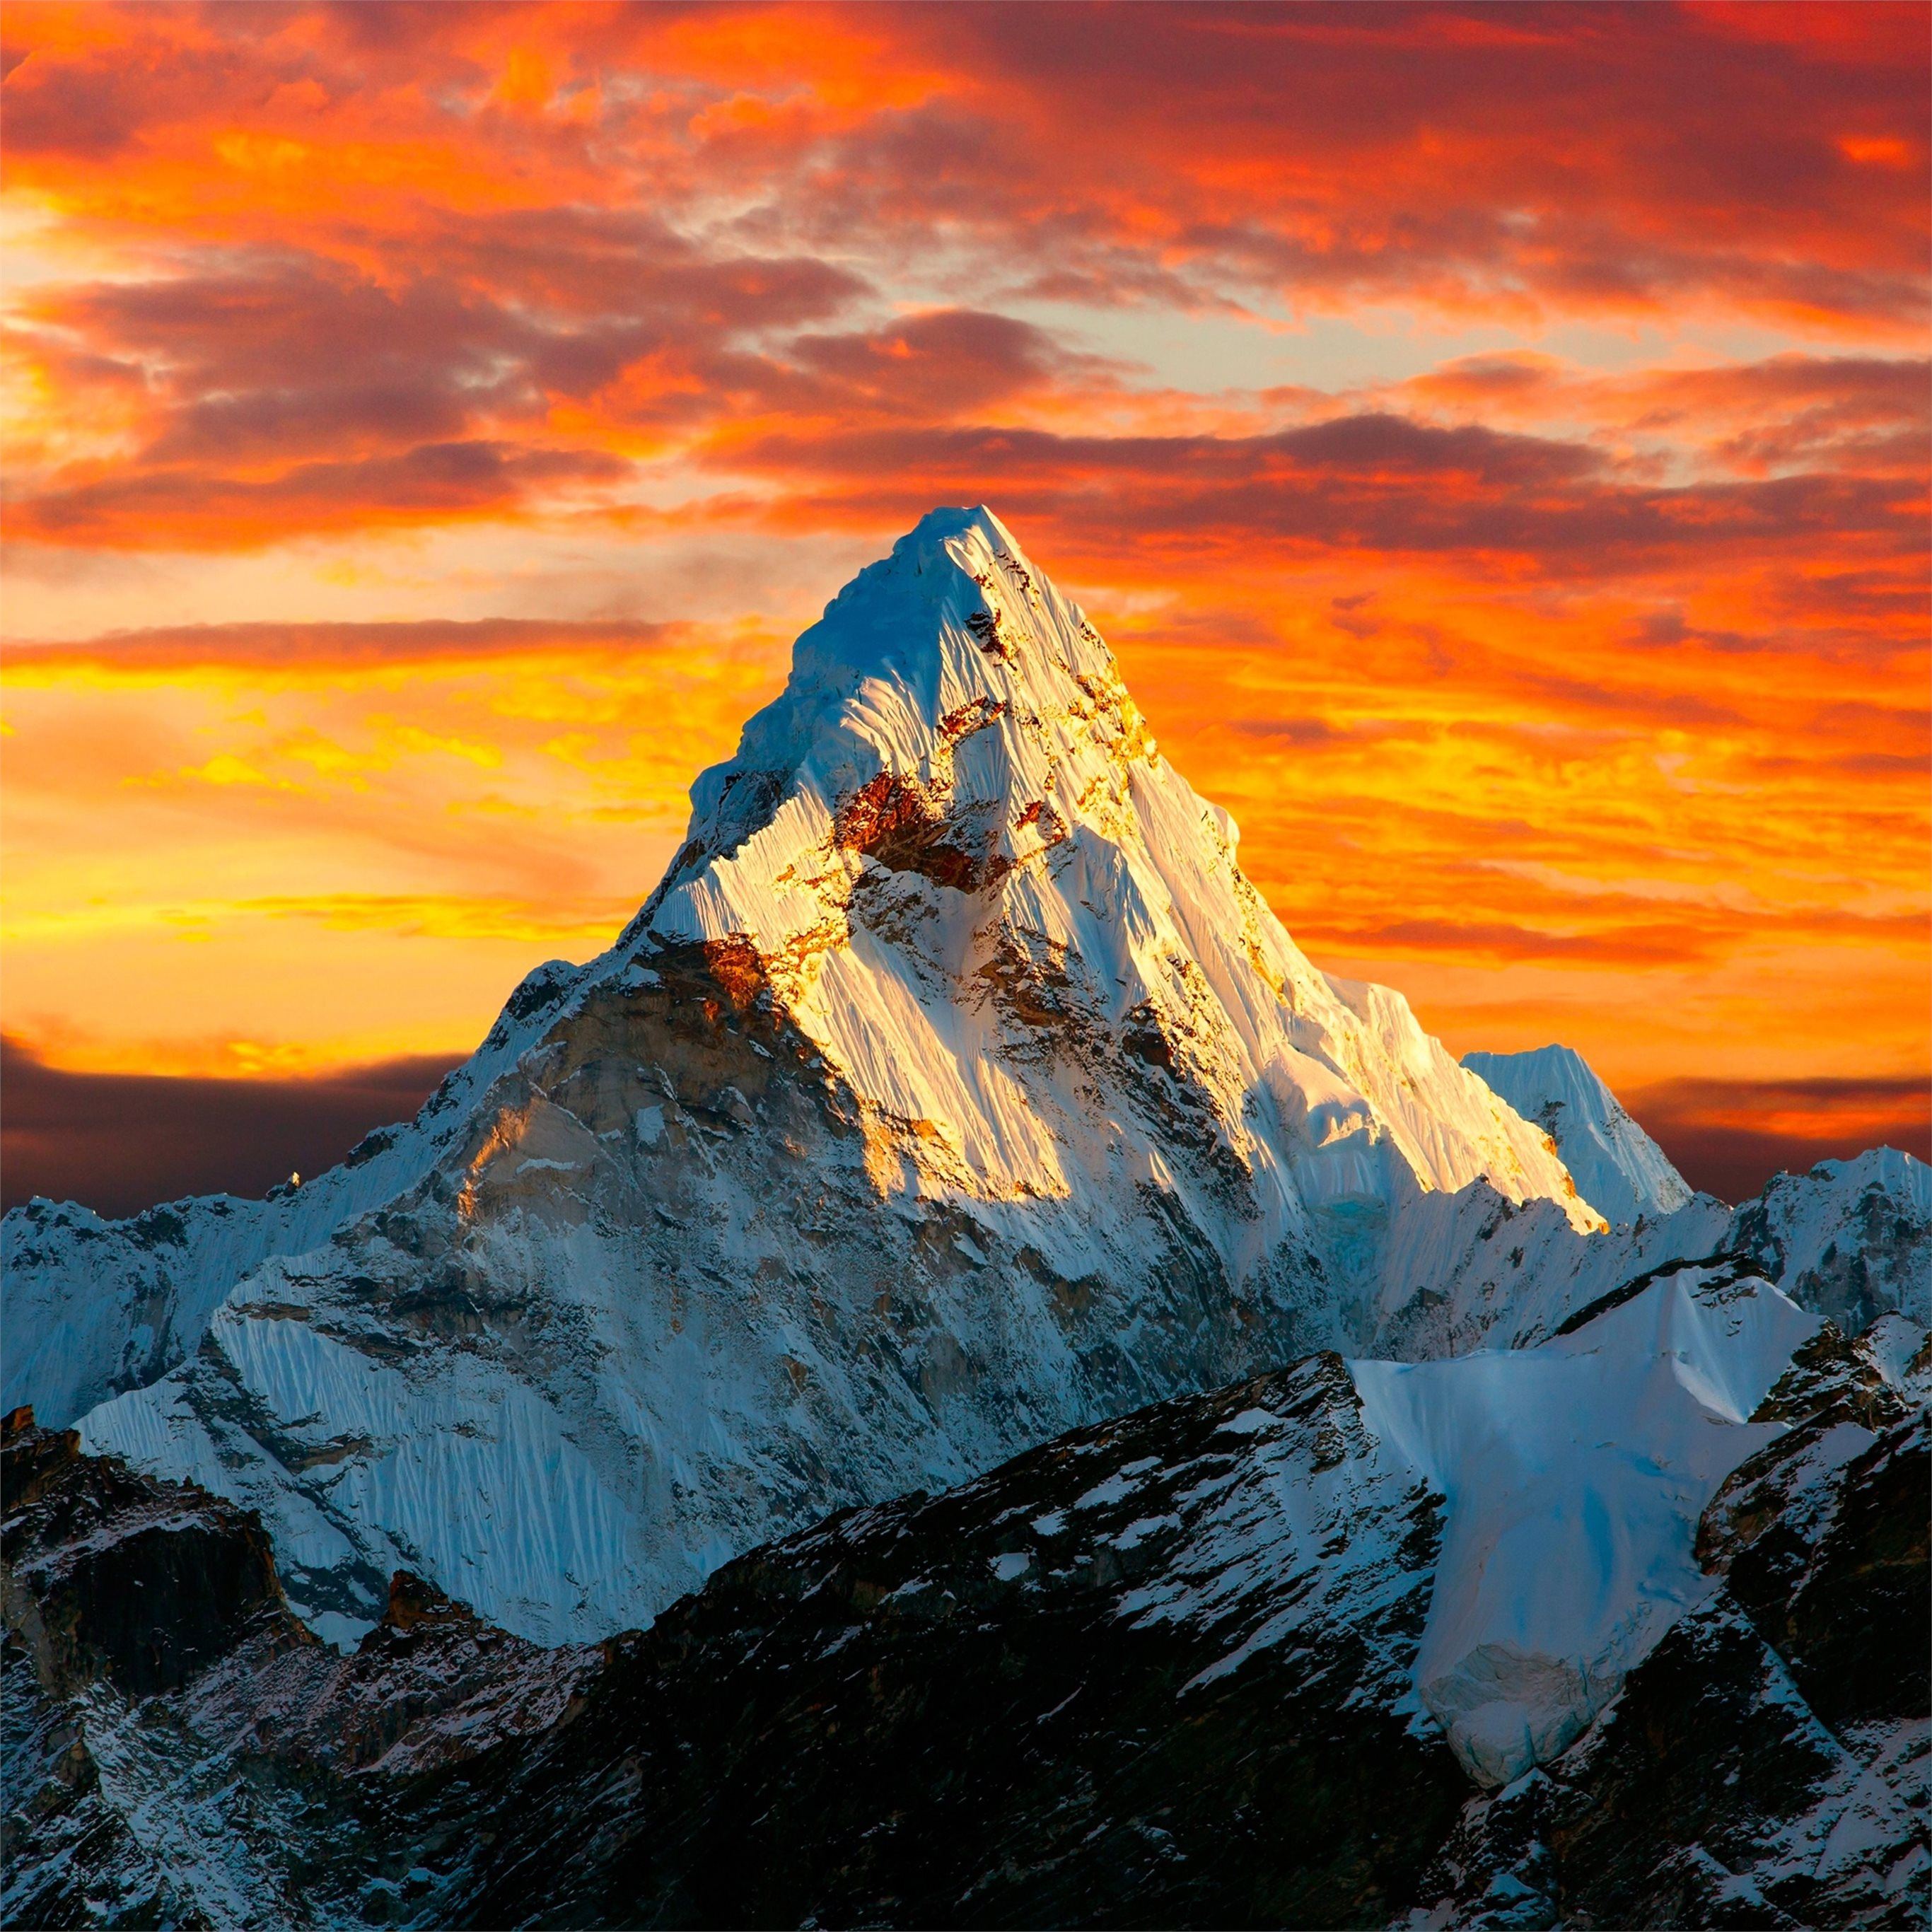 himalayas mountains landscape 4k iPad Pro Wallpaper Free Download